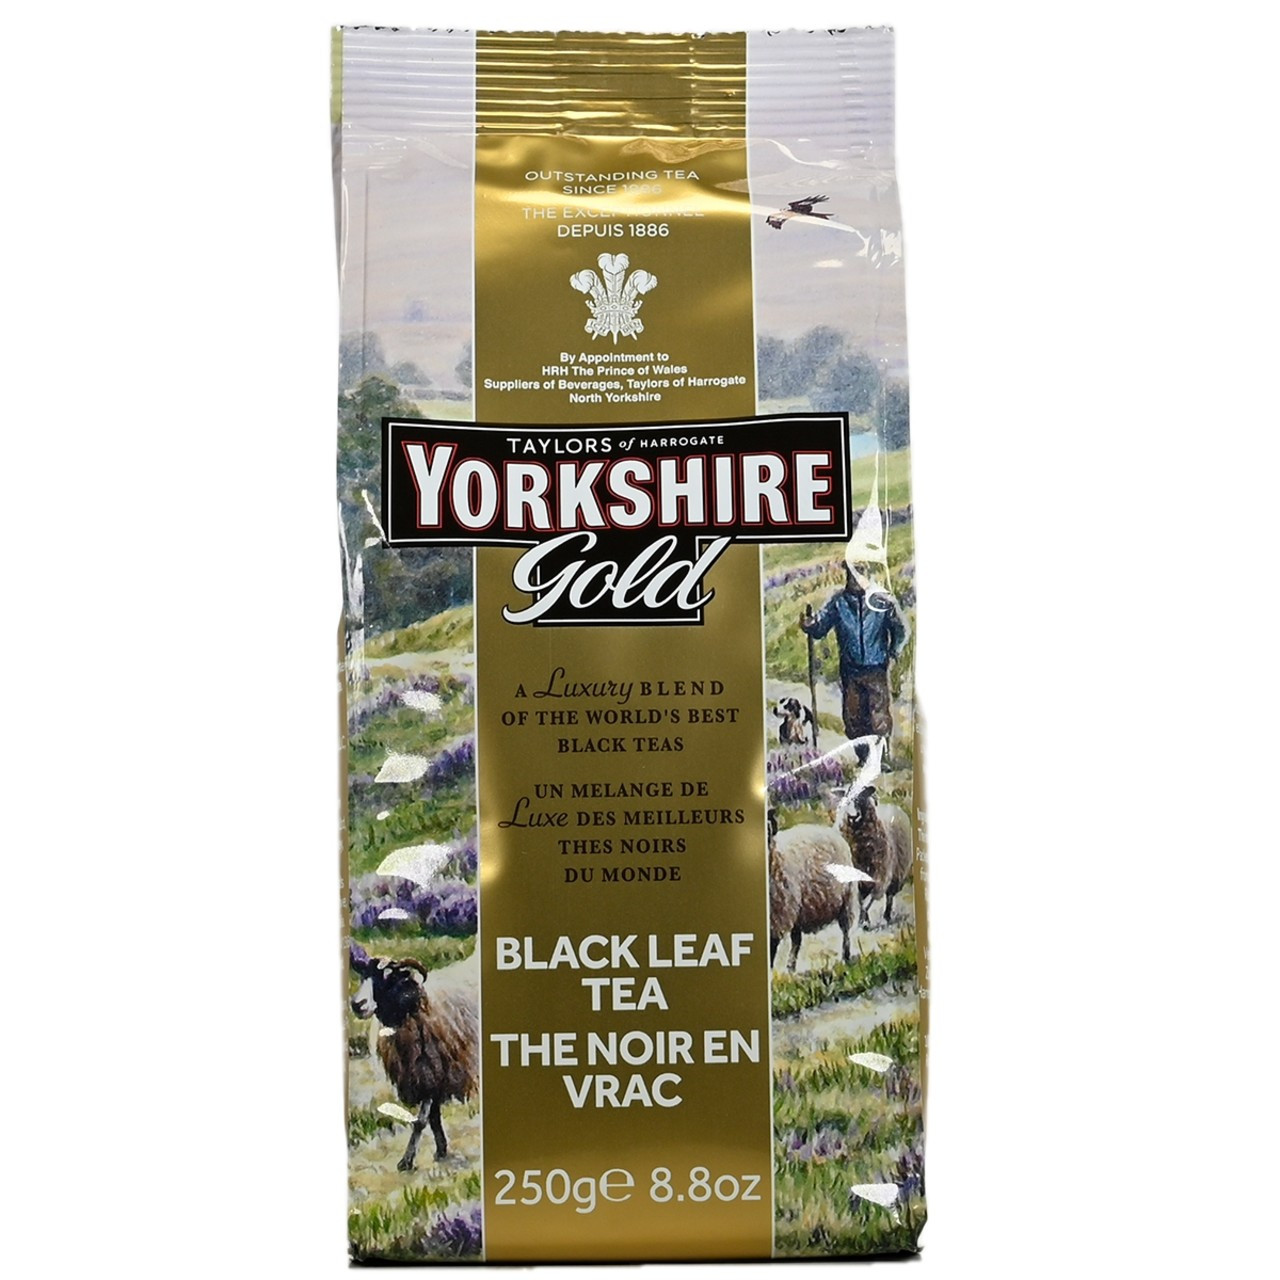 Yorkshire Gold Tea loose Tea 8.8oz Foil Bag